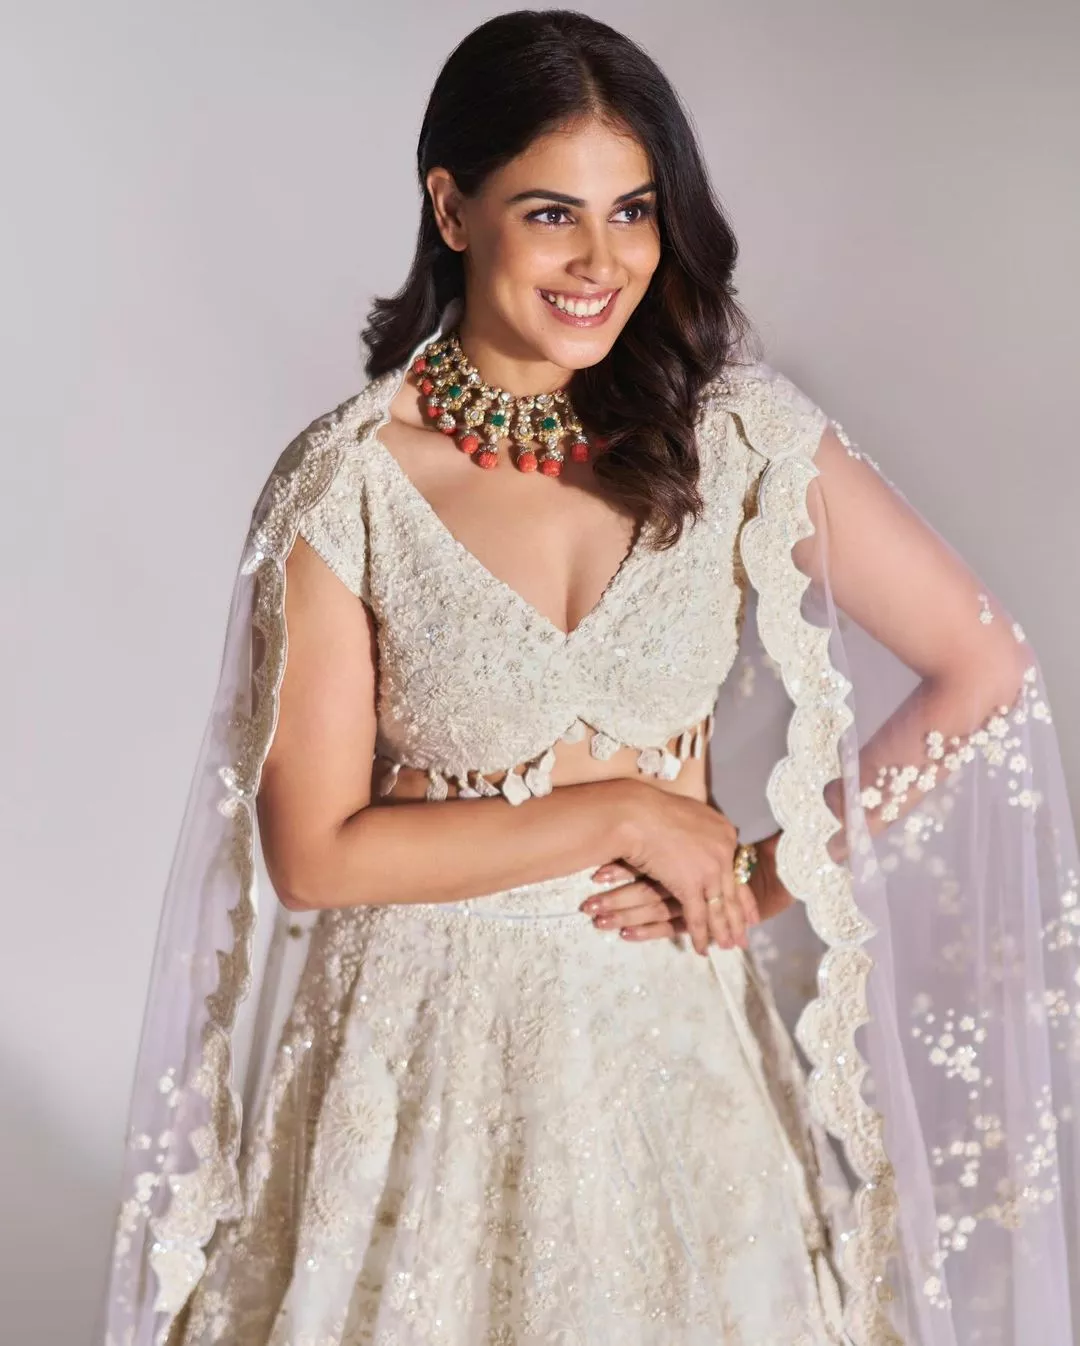 Priyanka Chopra's Wedding Dress's Secret Messages